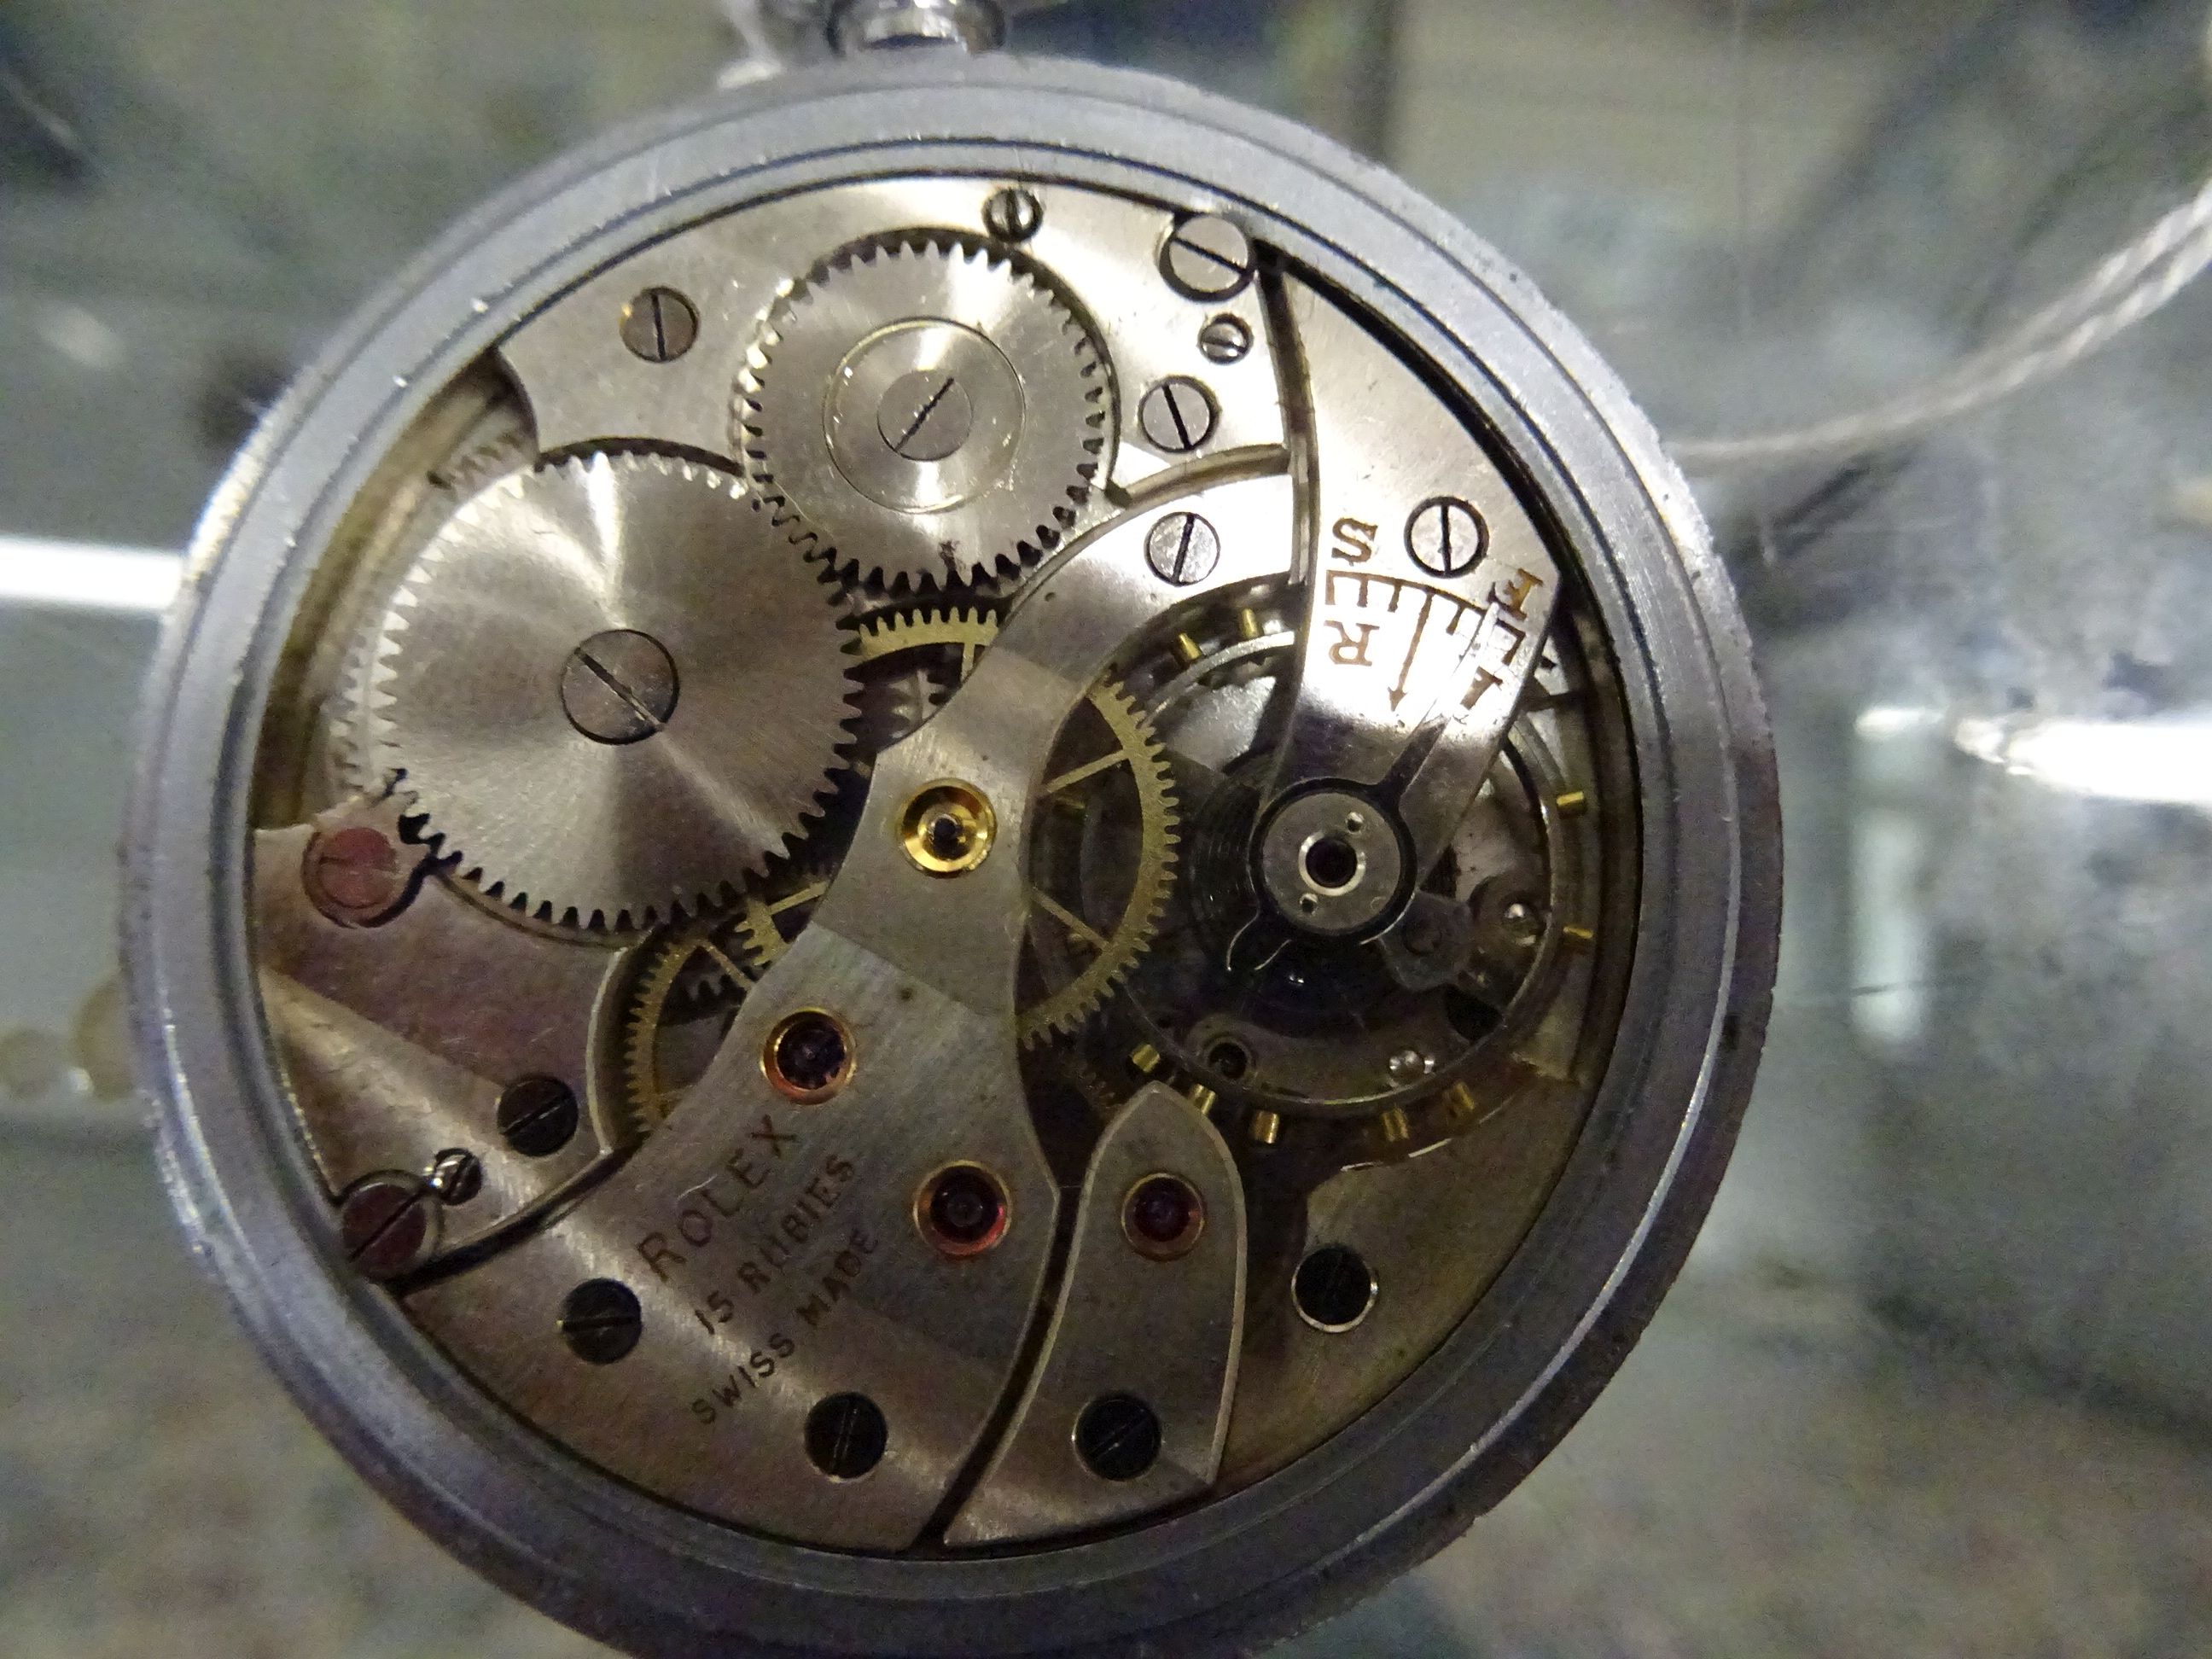 WW2 era Rolex 15 jewel pocket watch marked to the dial "India Rolex" - Image 2 of 4